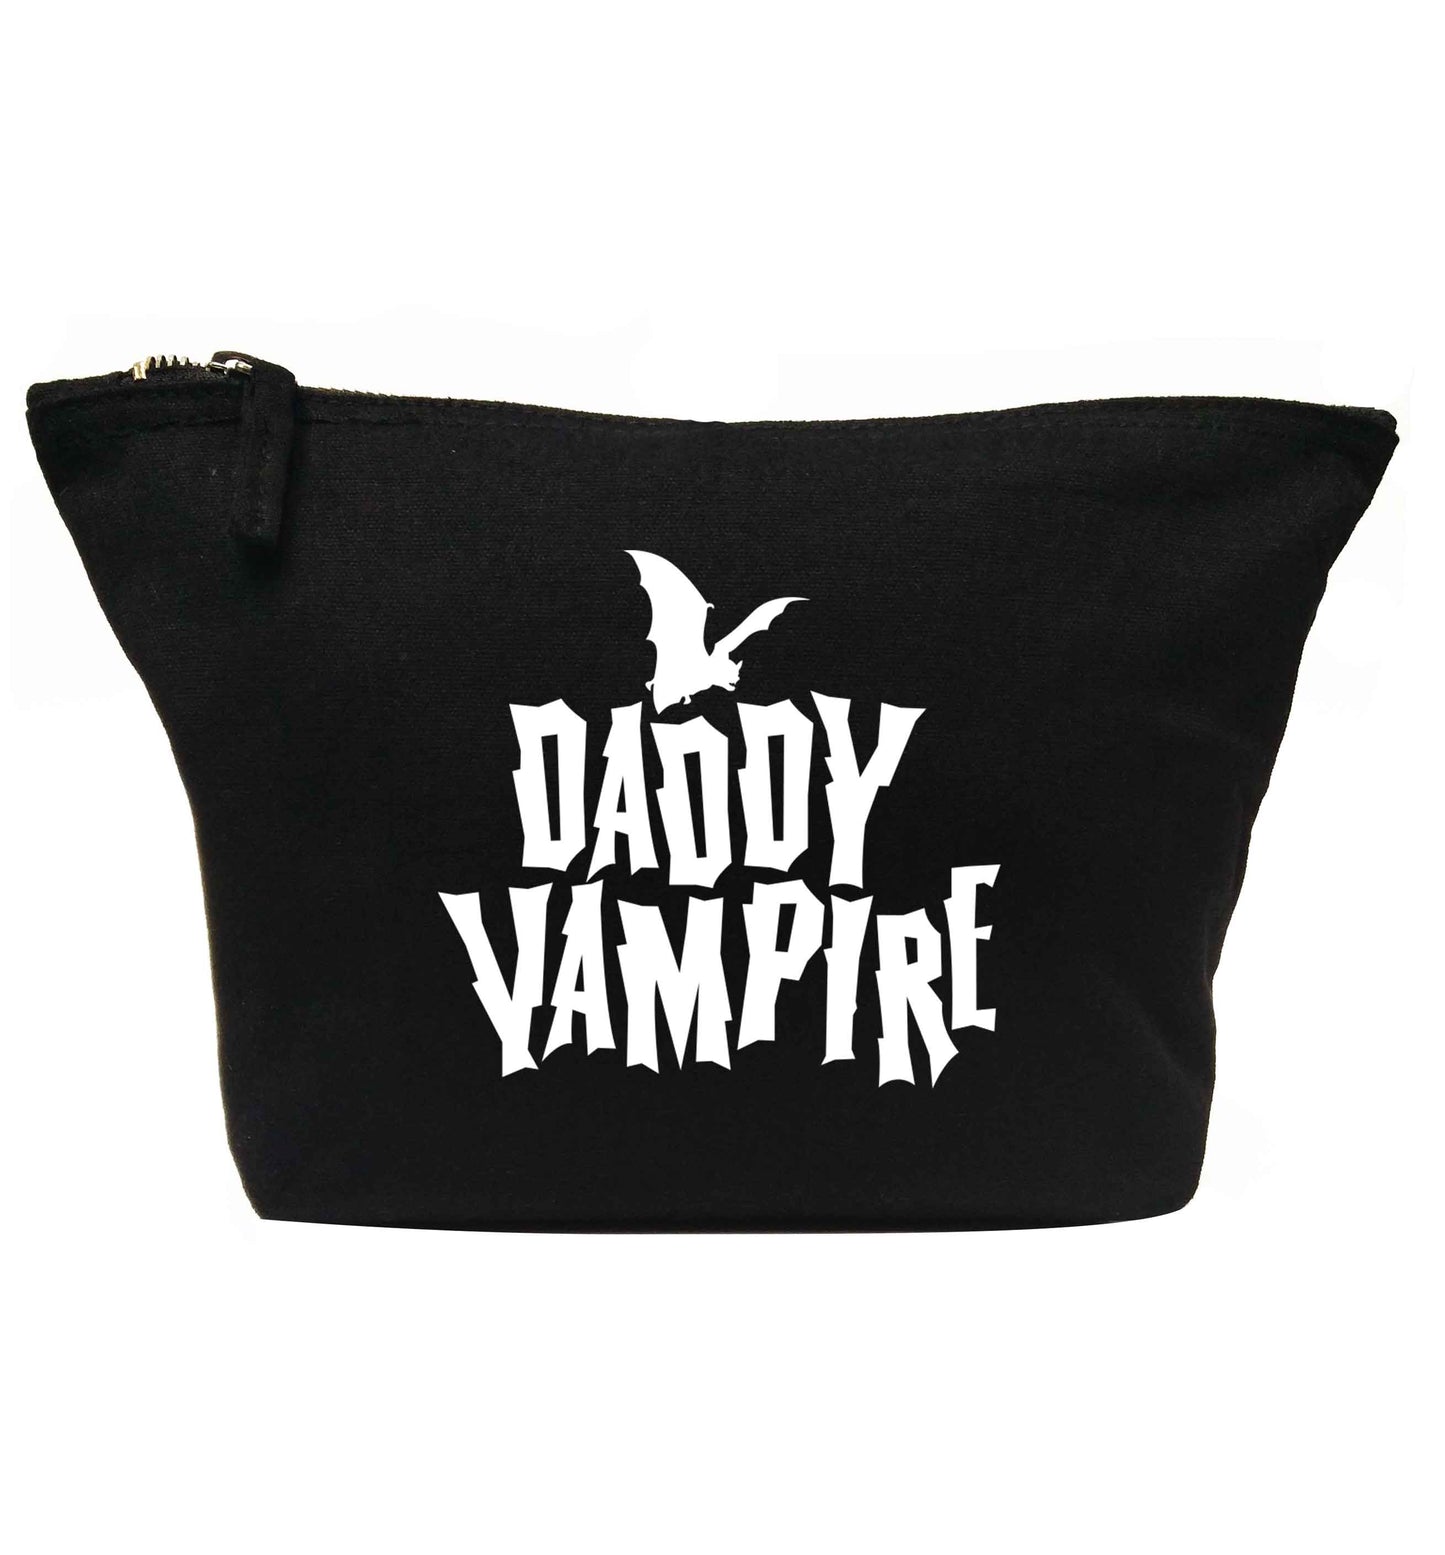 Daddy vampire | Makeup / wash bag